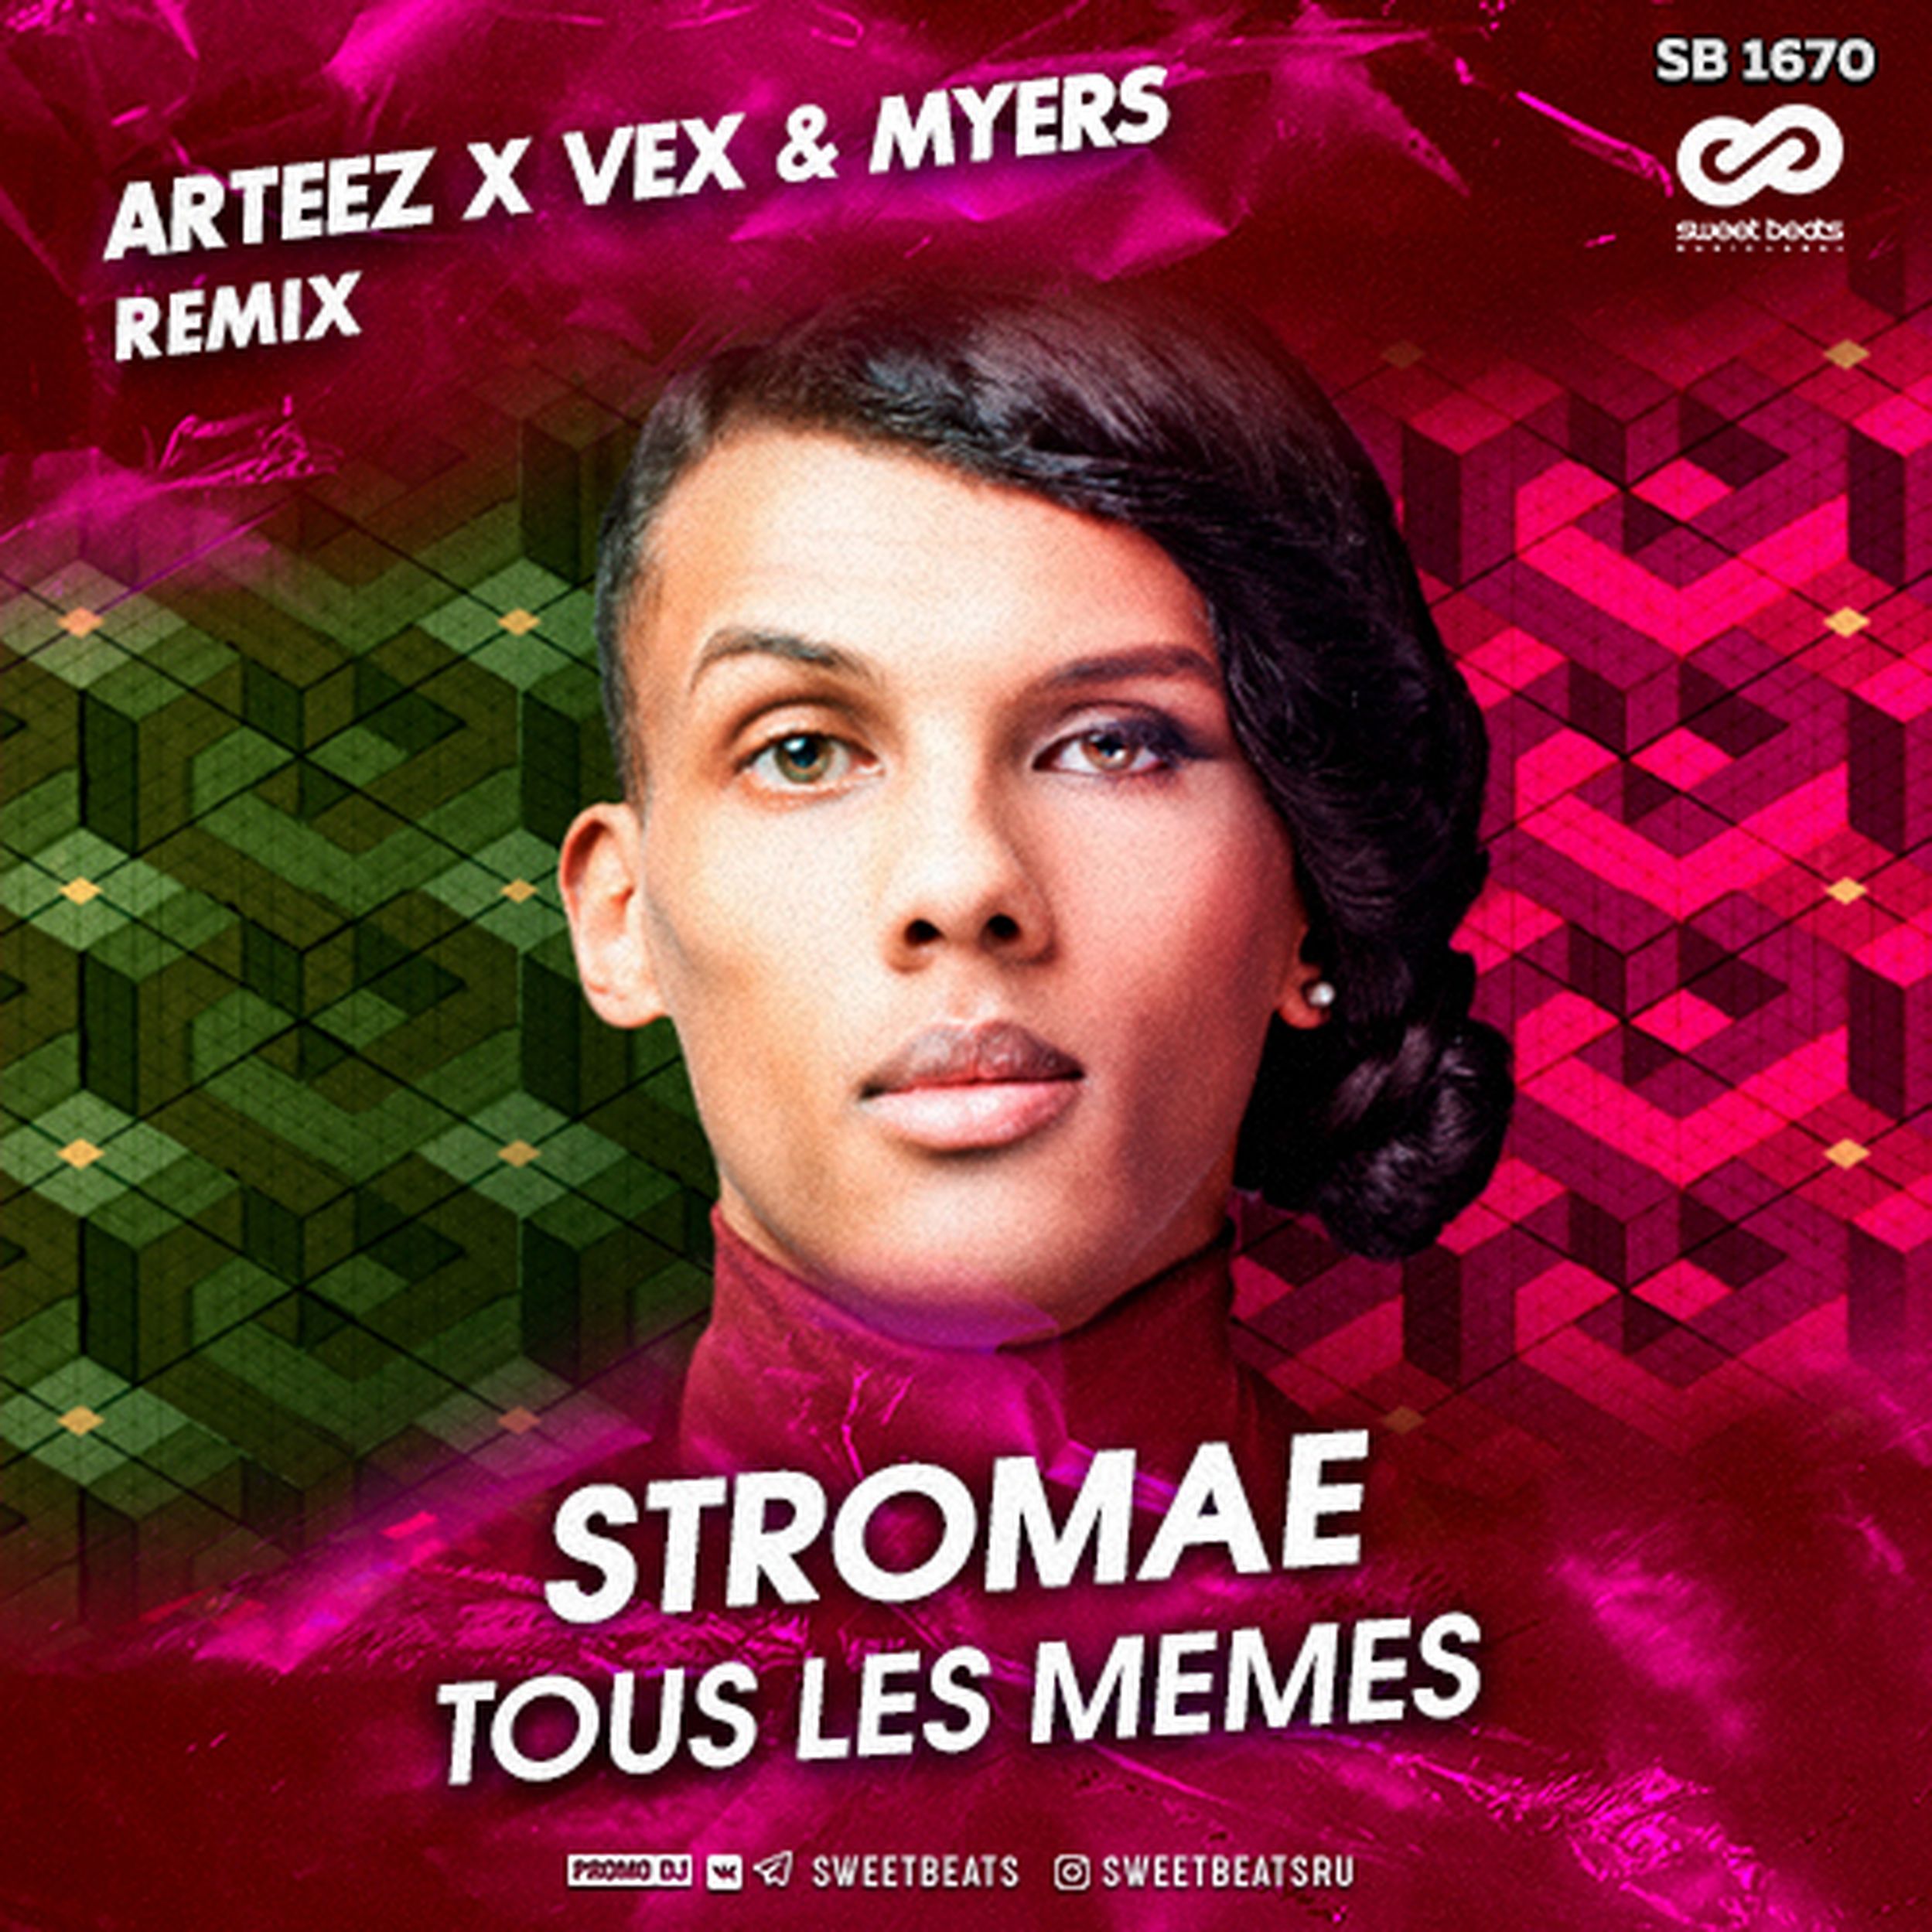 Stromae memes перевод. Стромае tous les memes. Стромае Рандеву. DJ ARTEEZ. Tous les mêmes от Stromae.